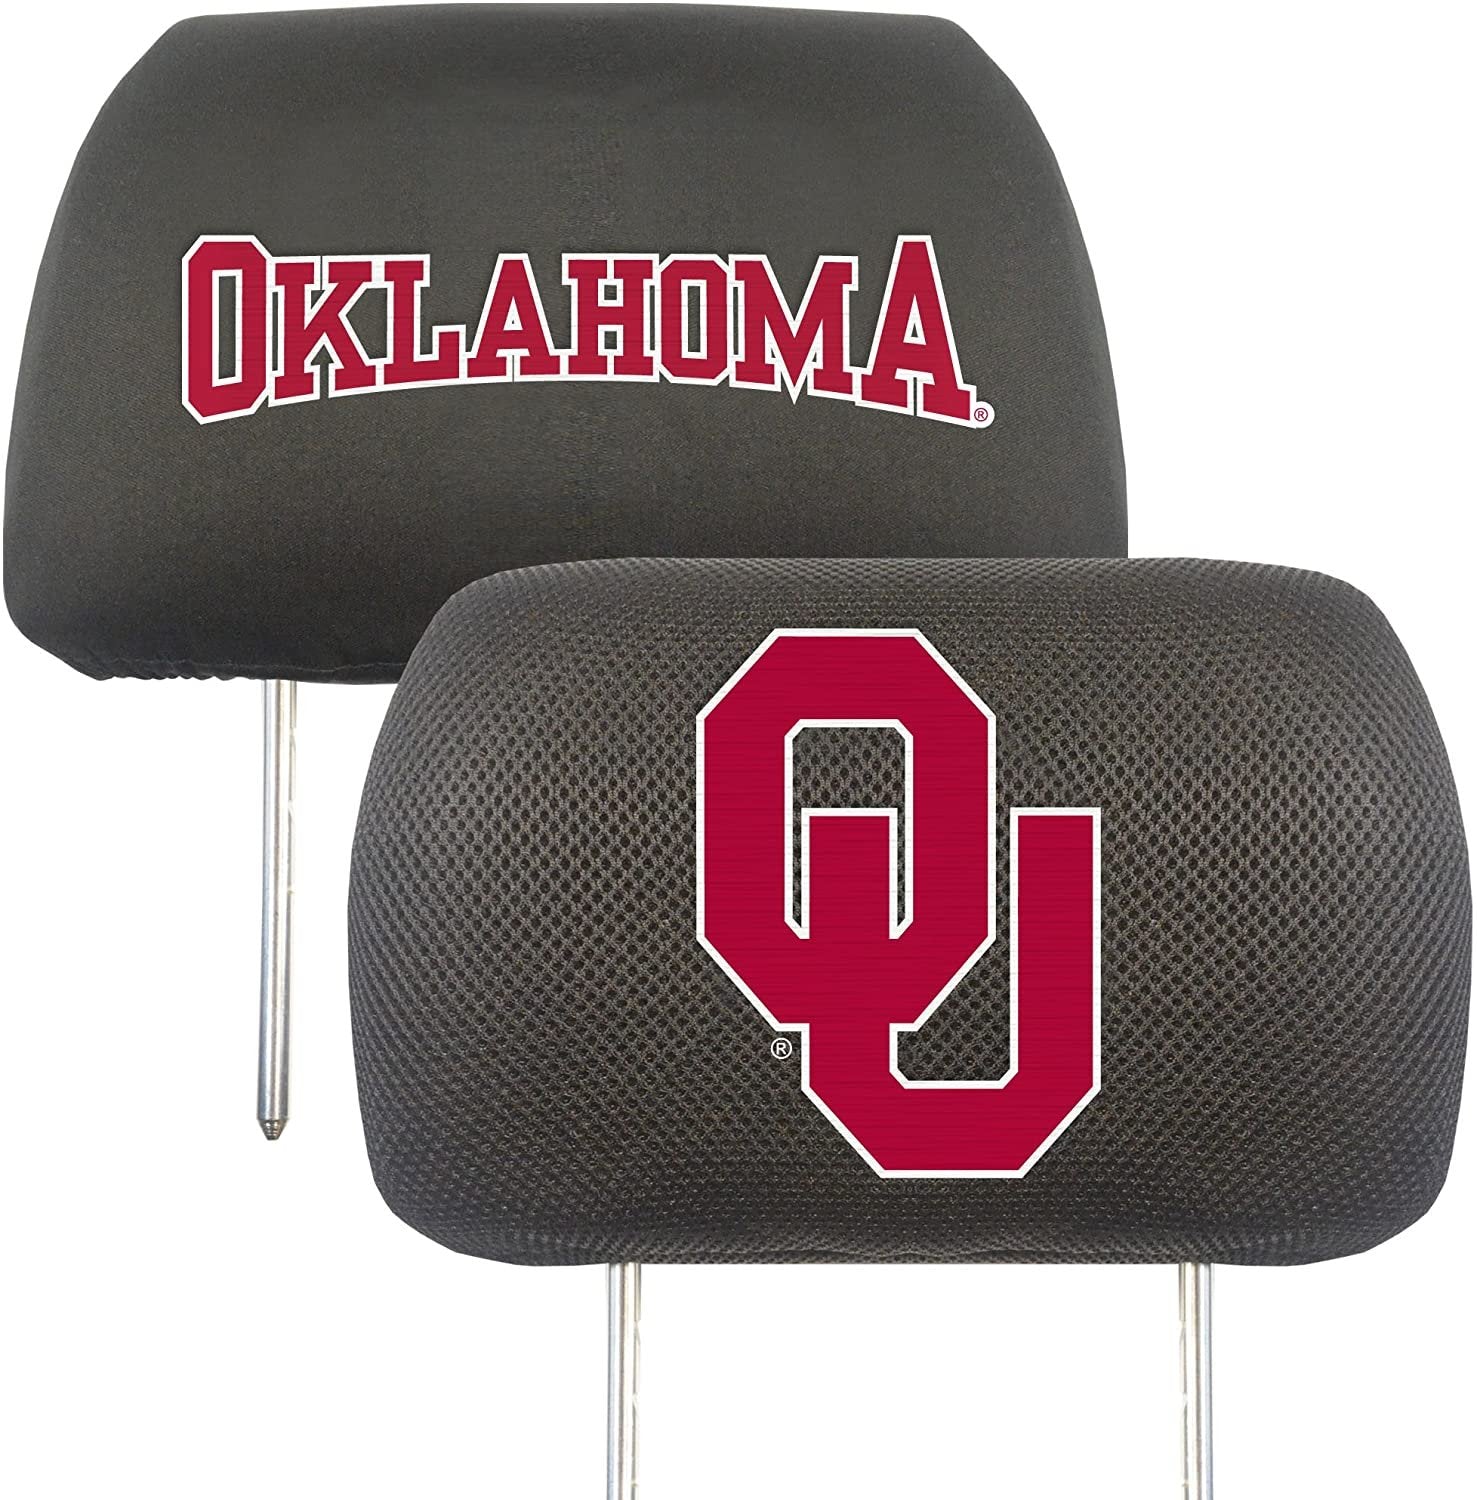 University of Oklahoma Sooners Pair of Premium Auto Head Rest Covers, Embroidered, Black Elastic, 14x10 Inch